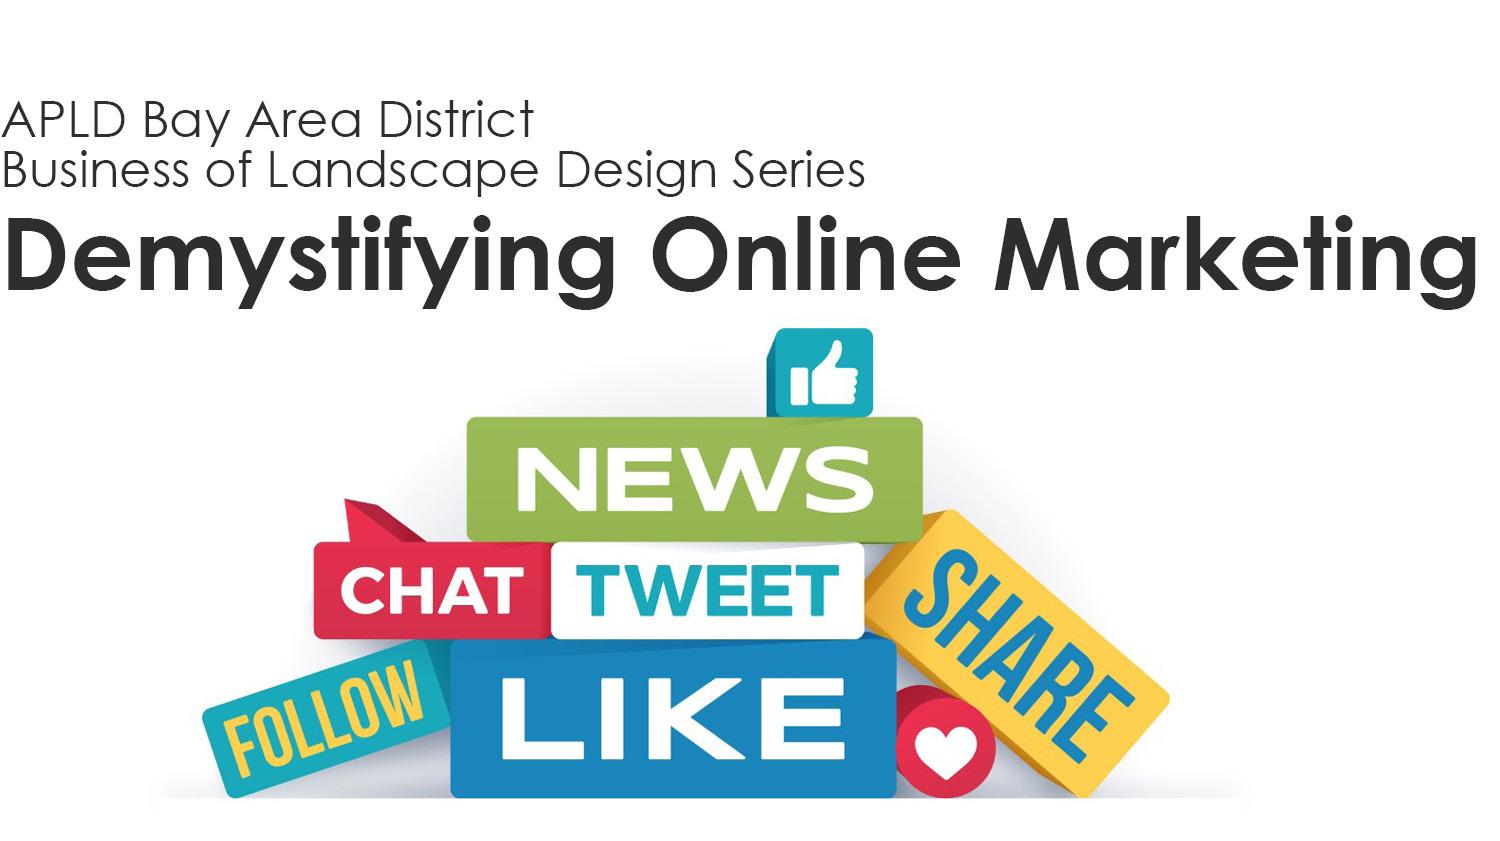 The Business of Landscape Design: Demystifying Online Marketing 